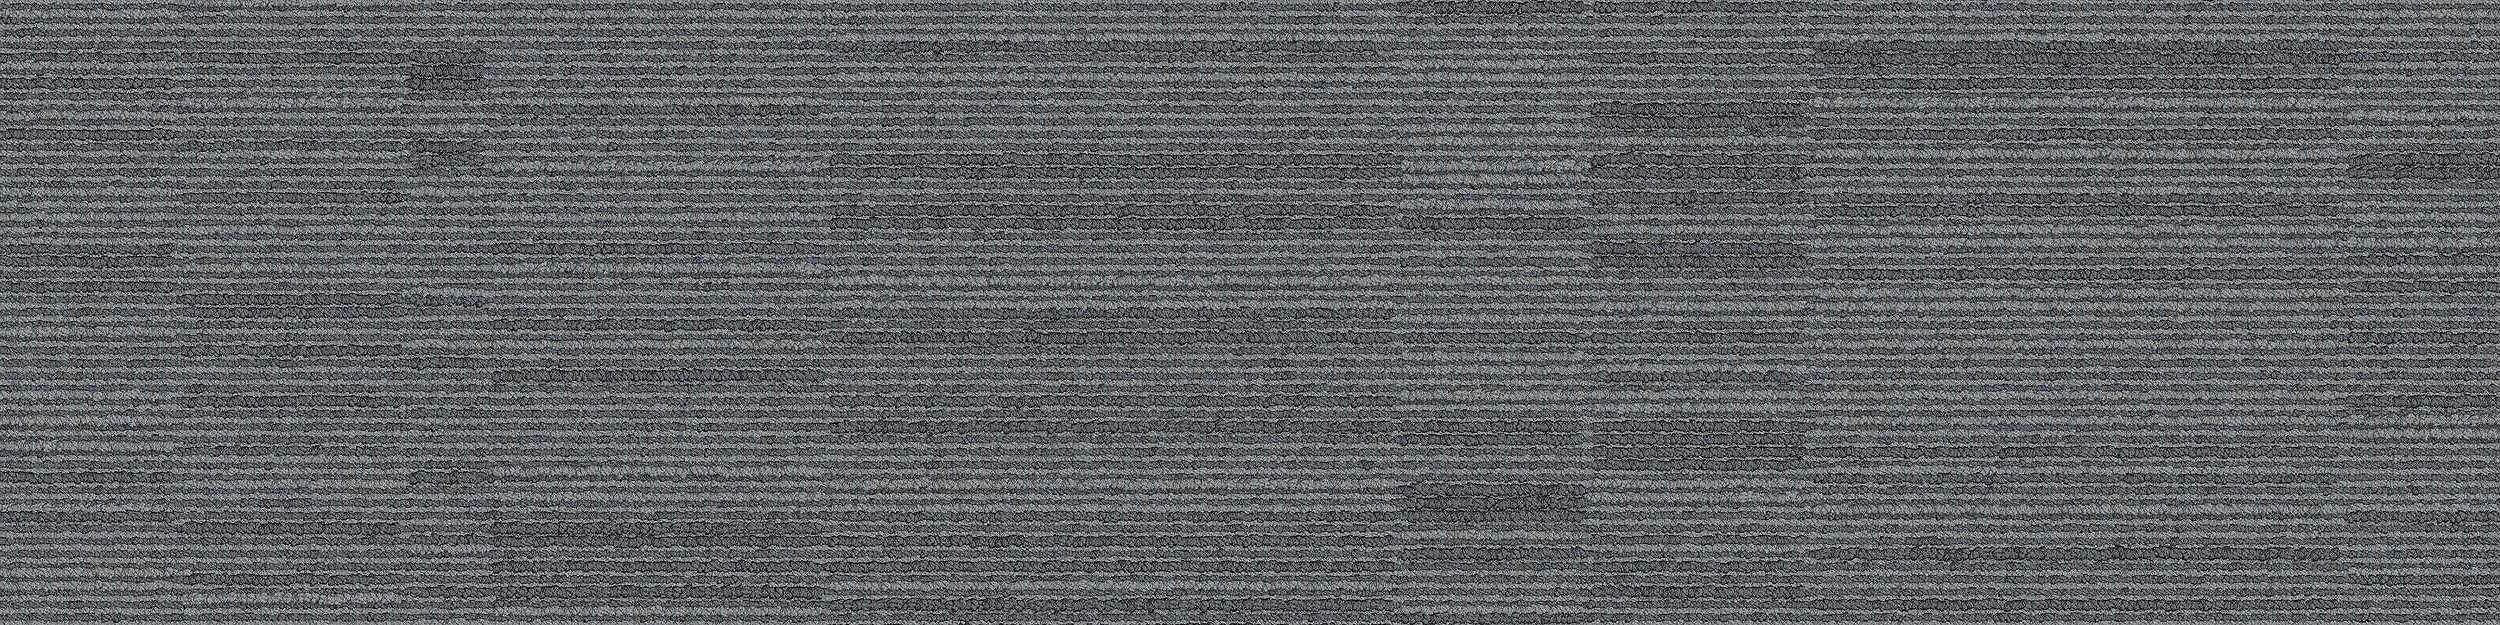 B702 Carpet Tile In North Sea image number 6